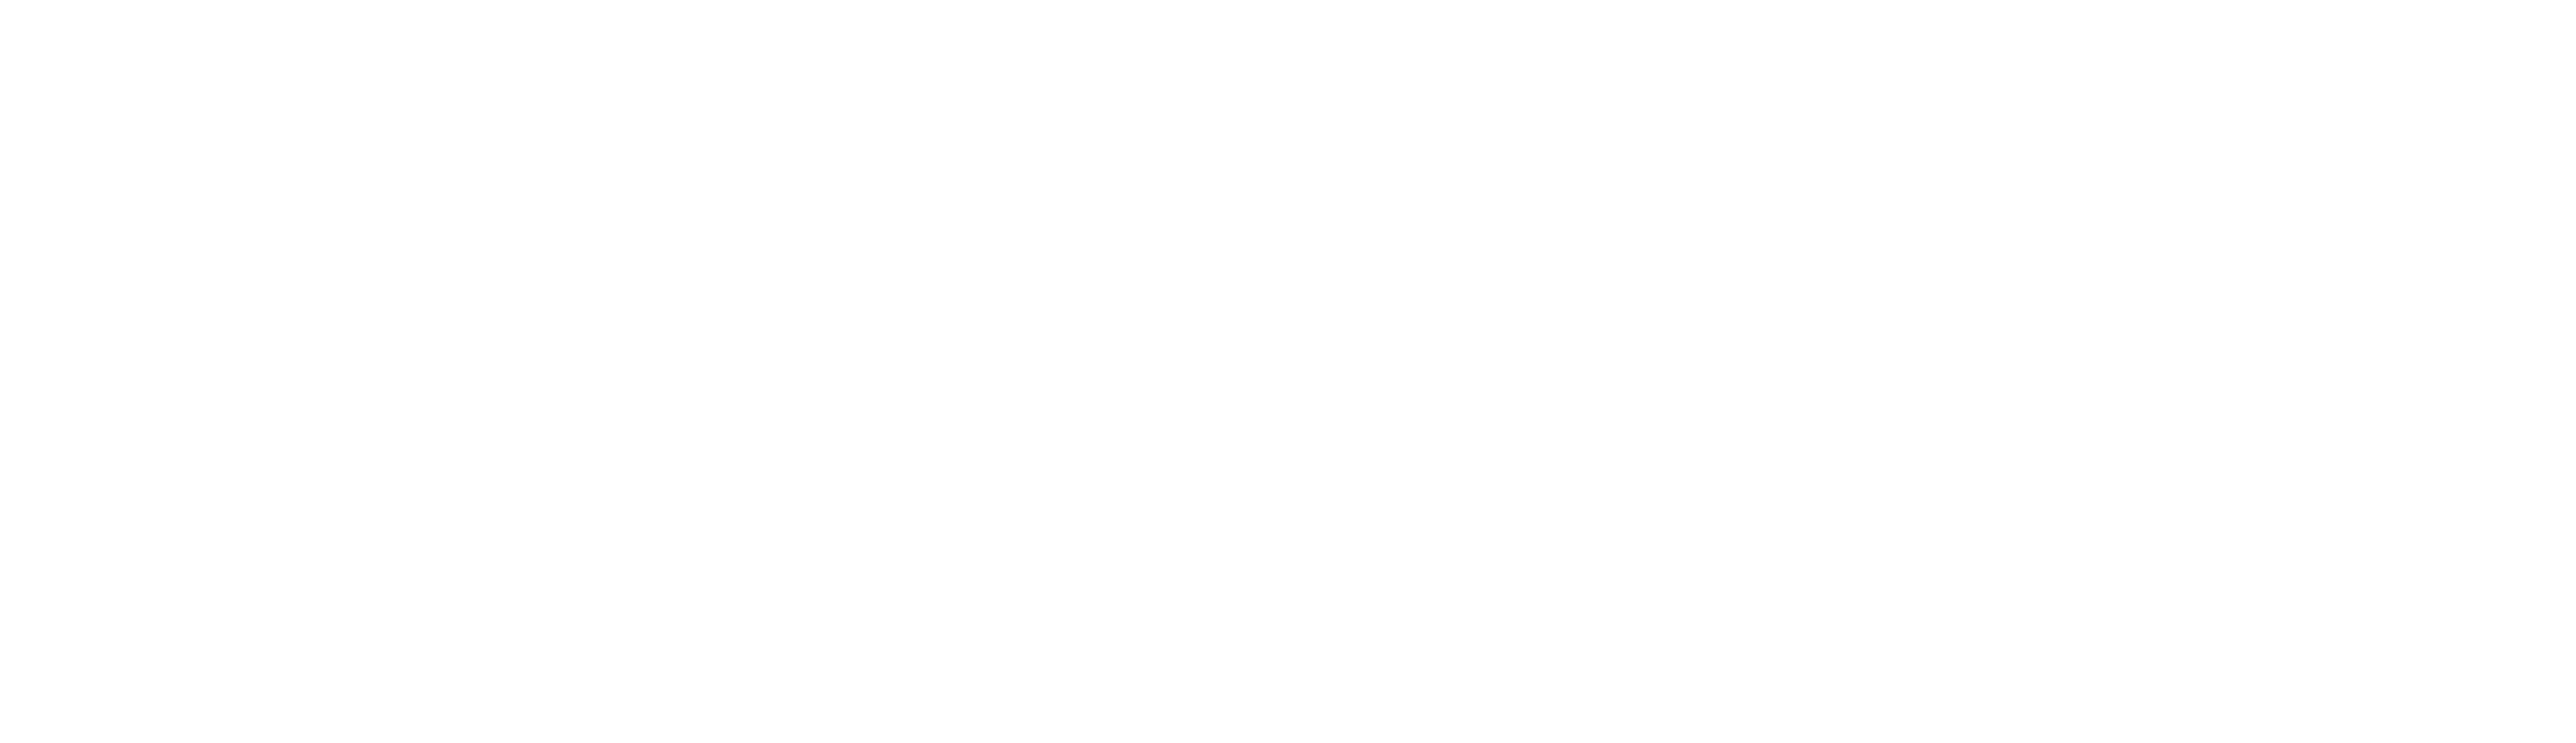 gputamir logo